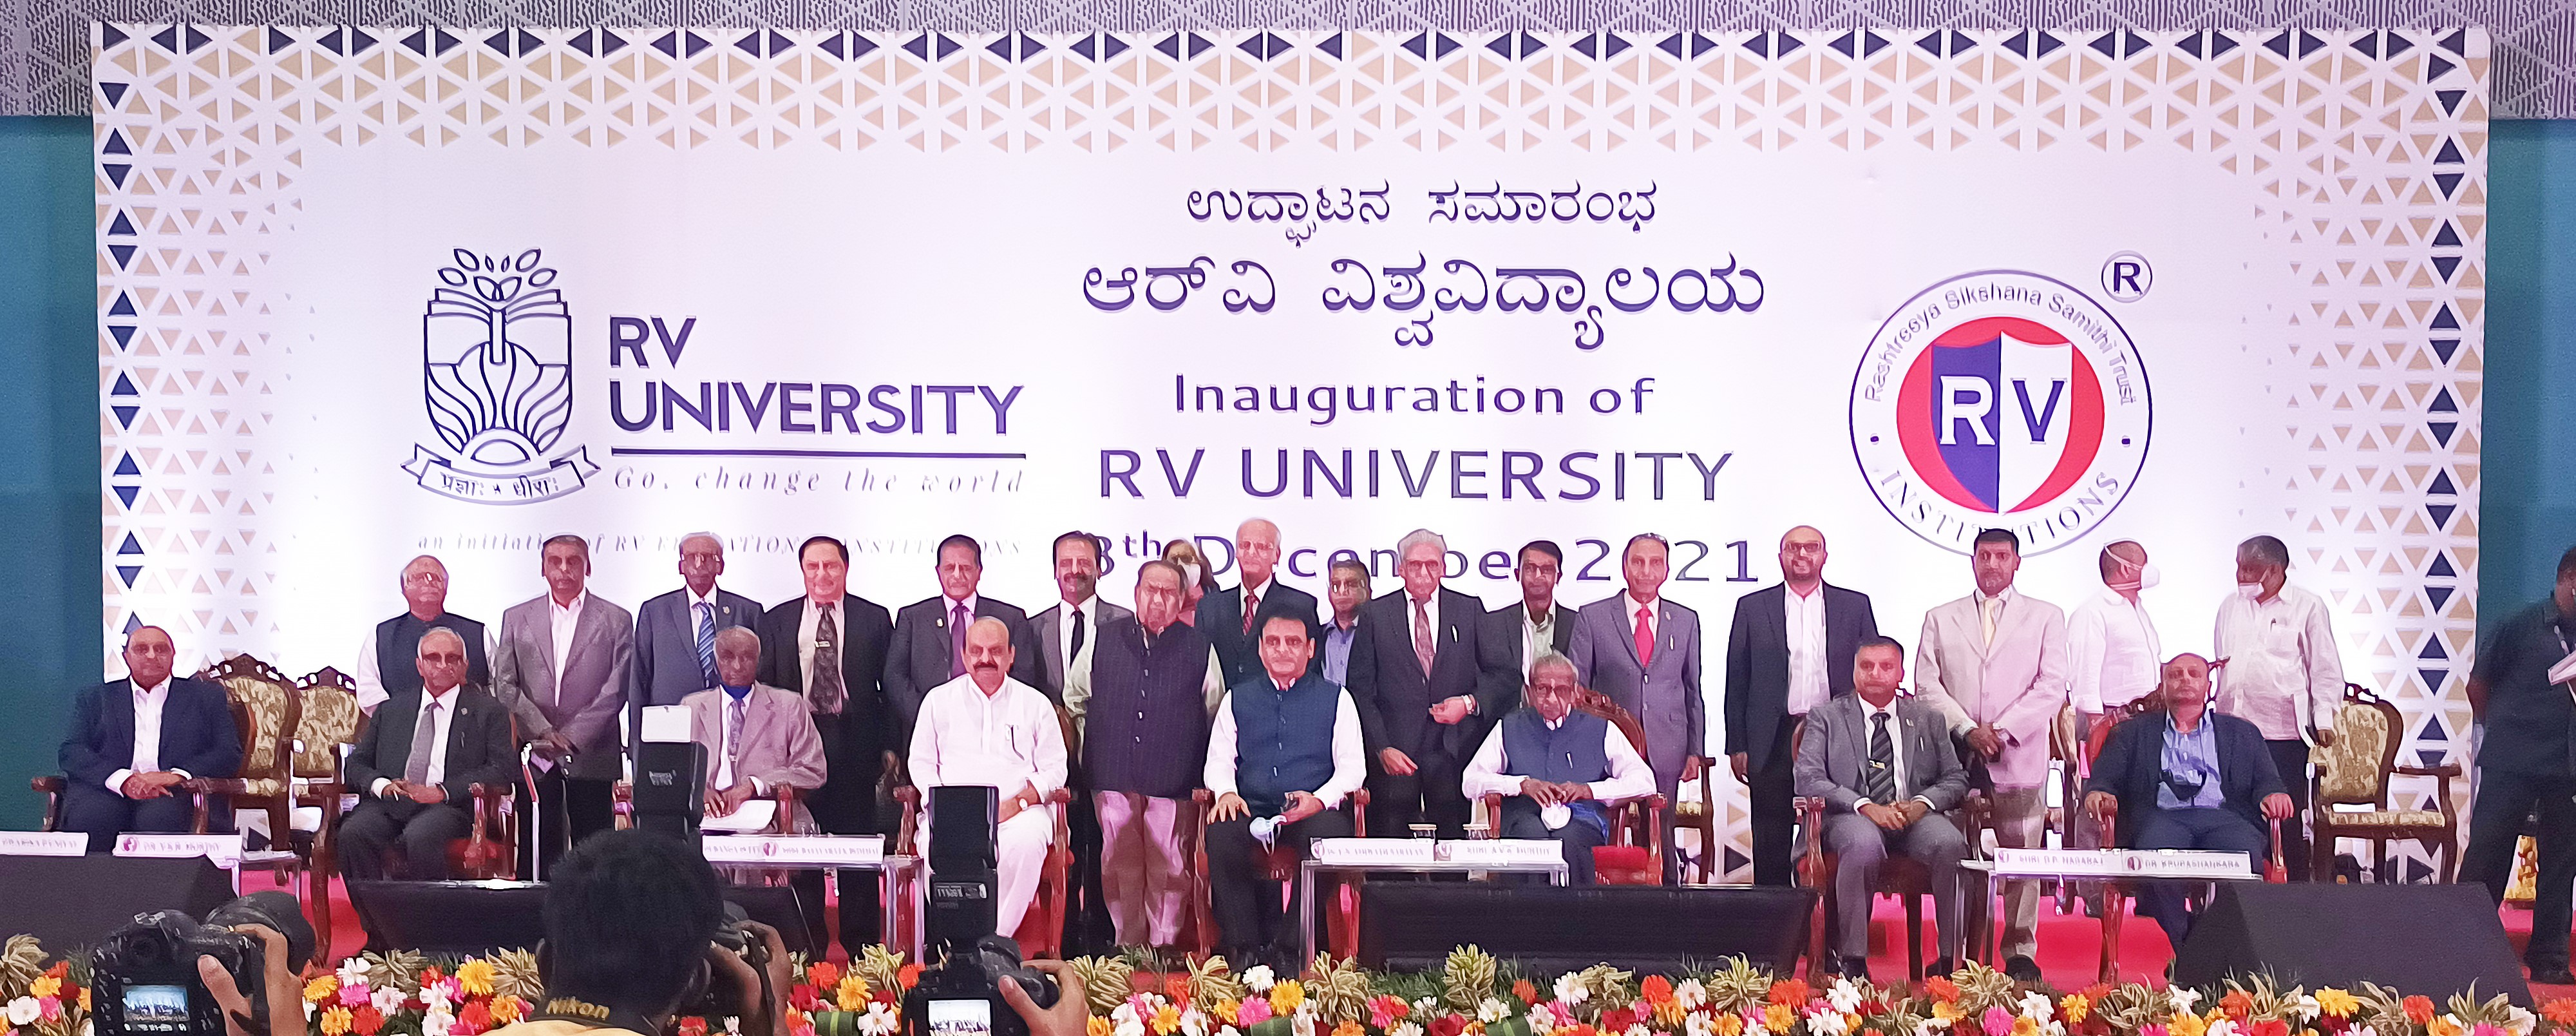 Chief Minister of Karnataka inaugurates RV University Two new Schools launched